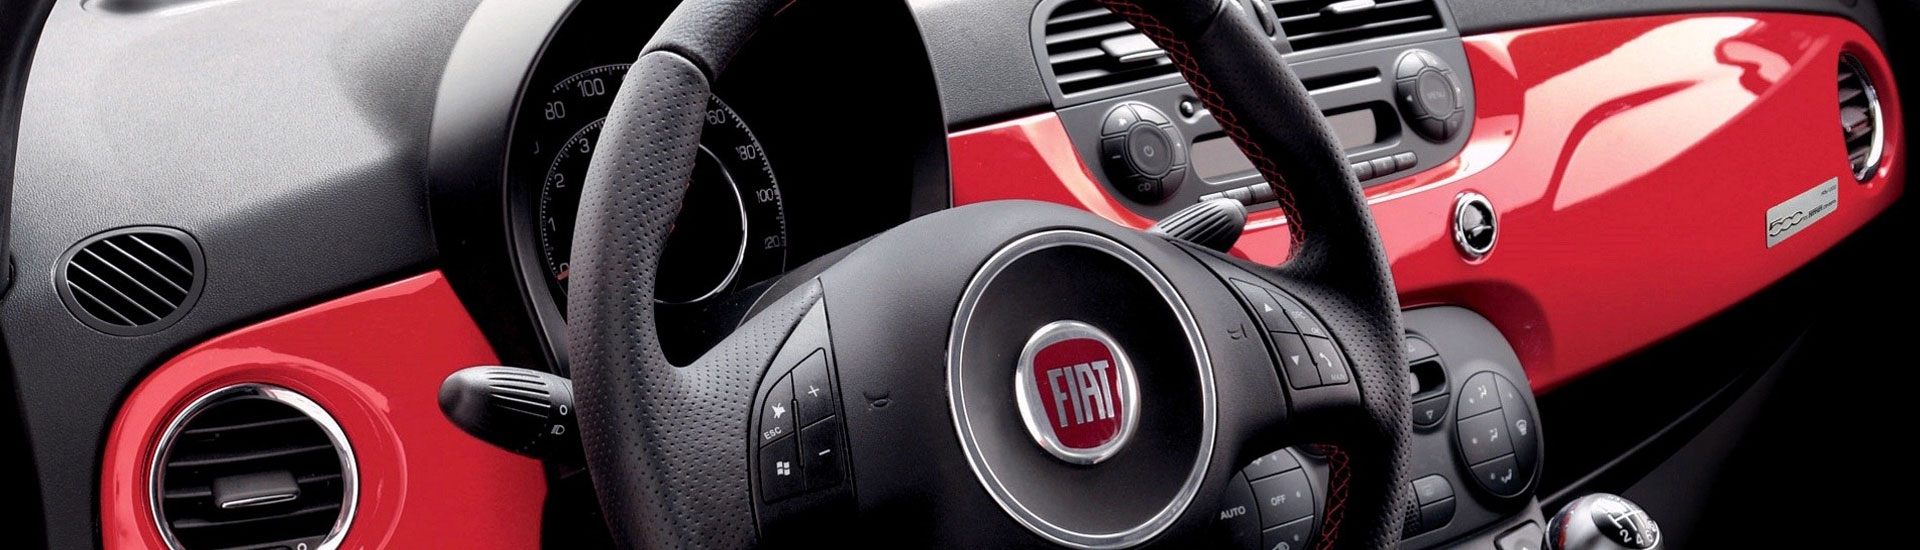 2019 Fiat 500x Custom Dash Kits